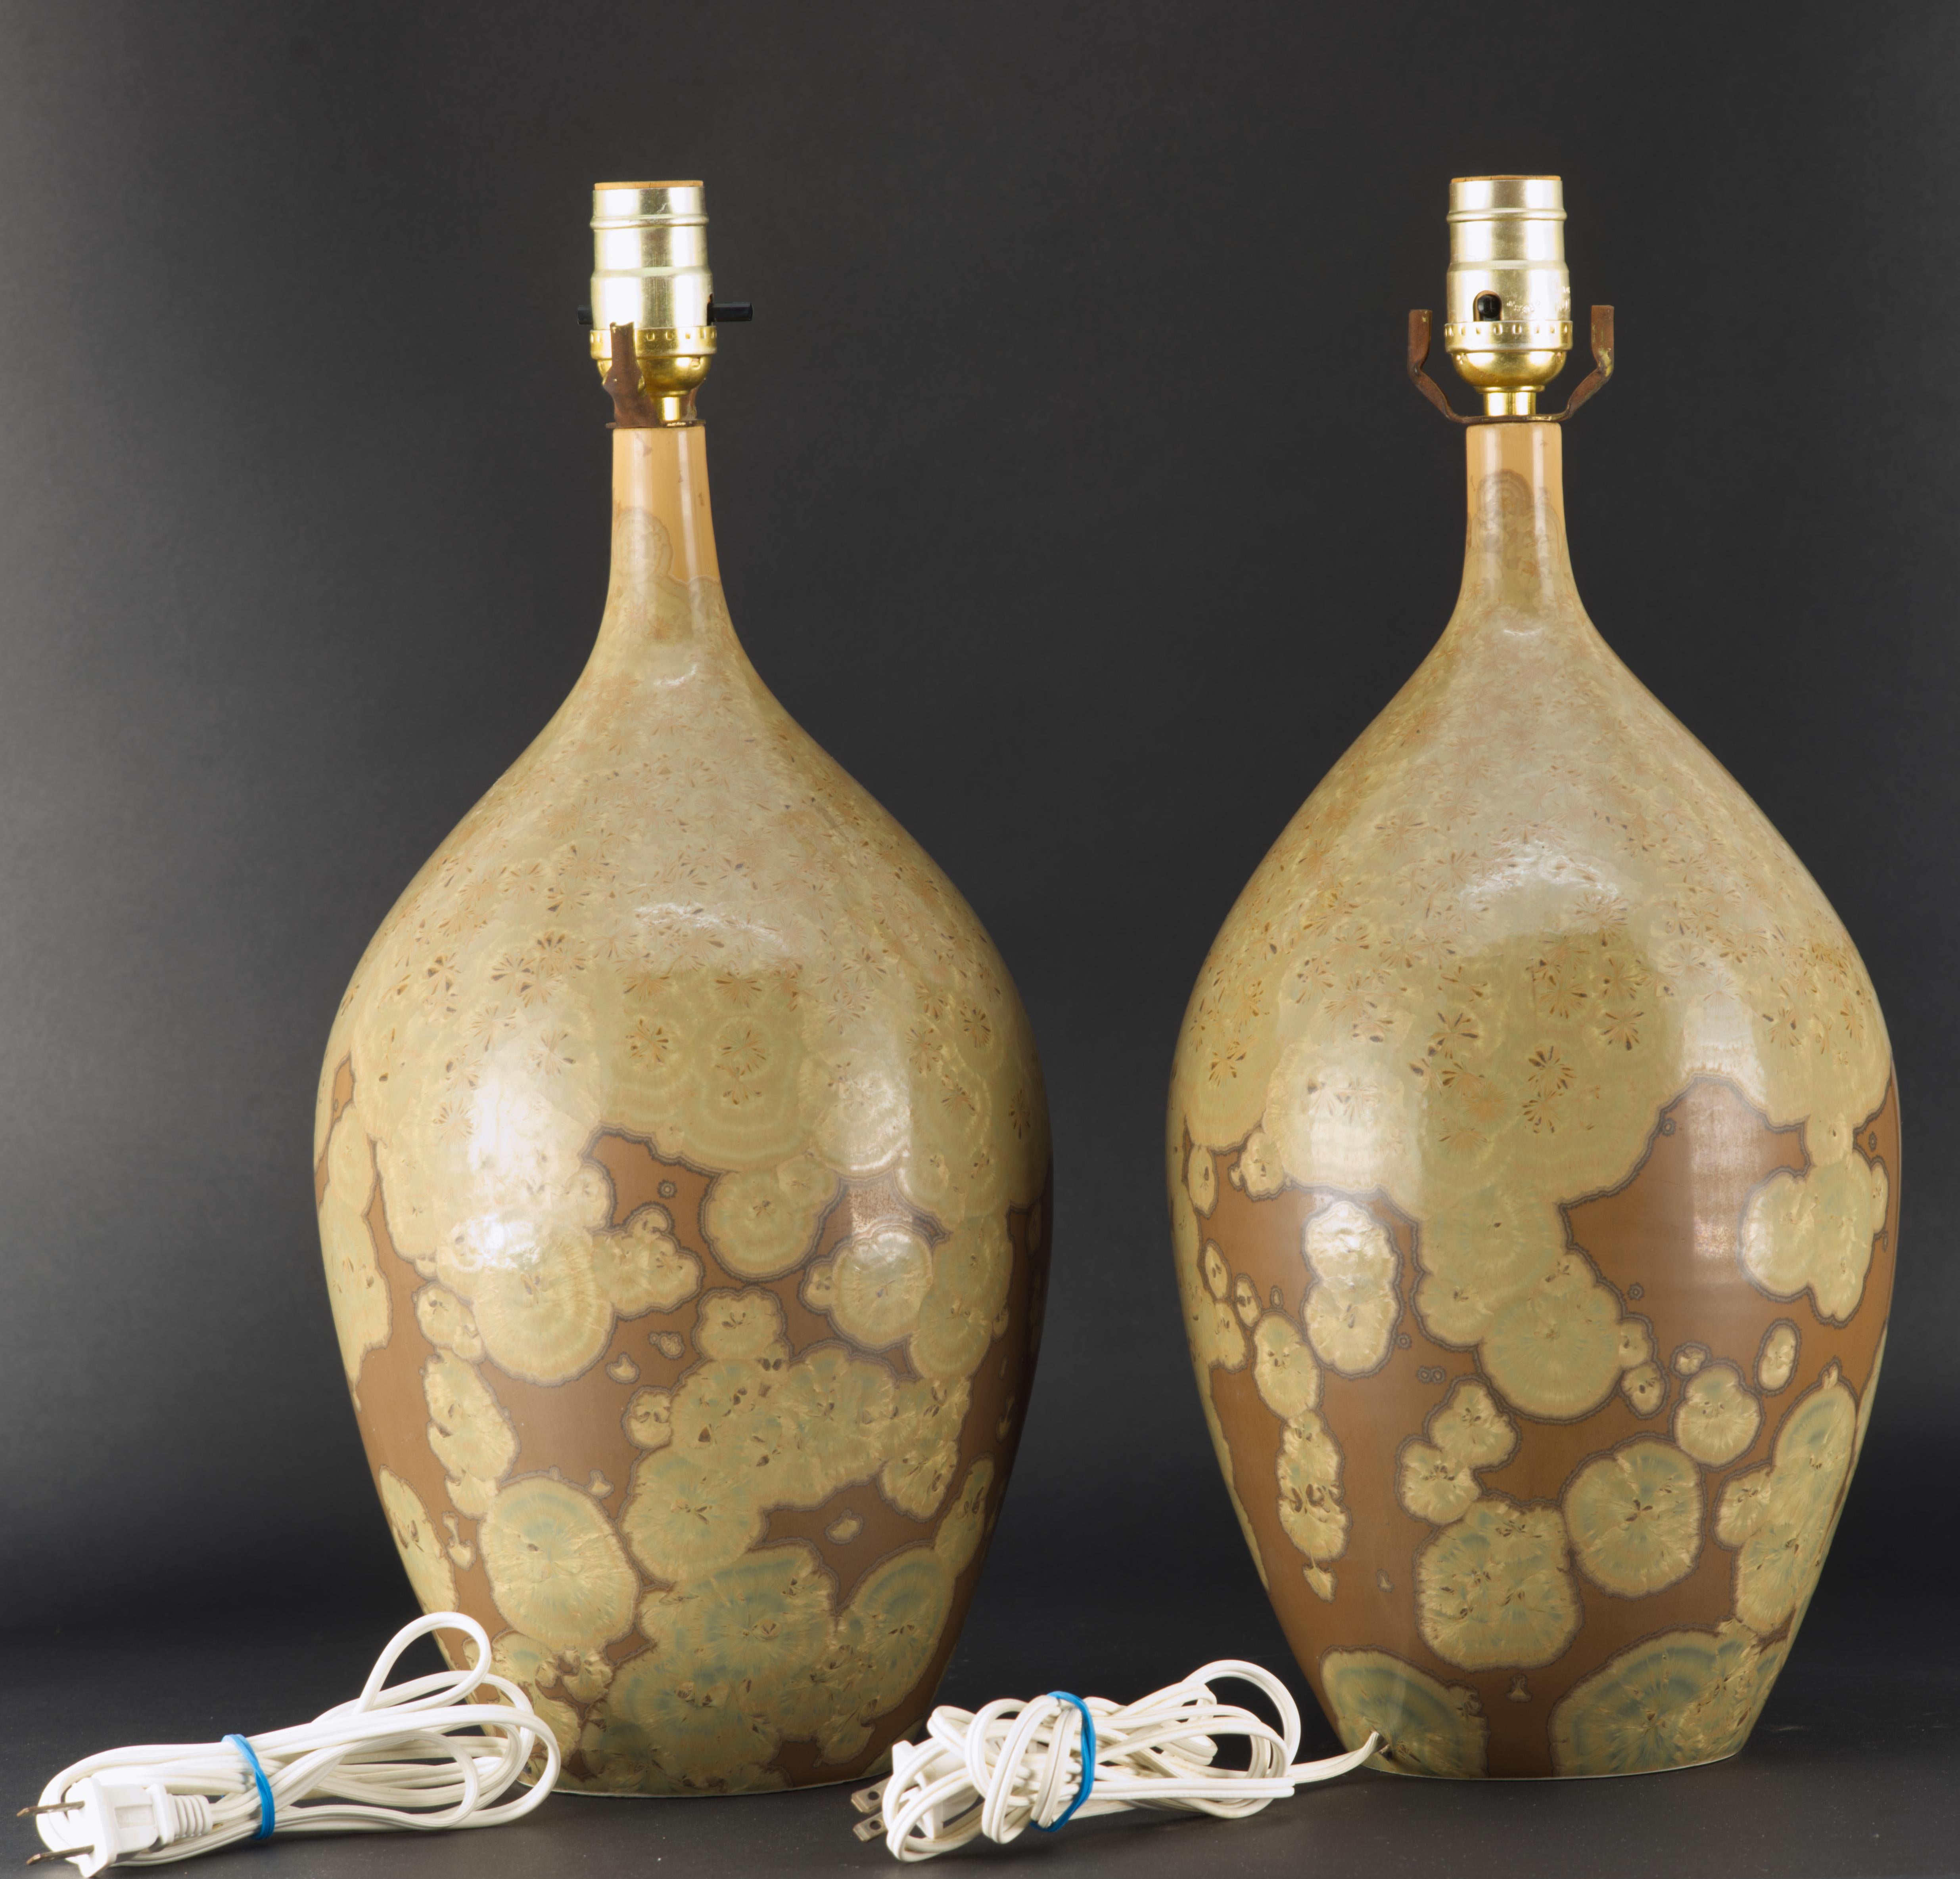 Hand-Crafted Pair of Organic Crystalline Glaze Hand Thrown Ceramic Lamps, American Studio 